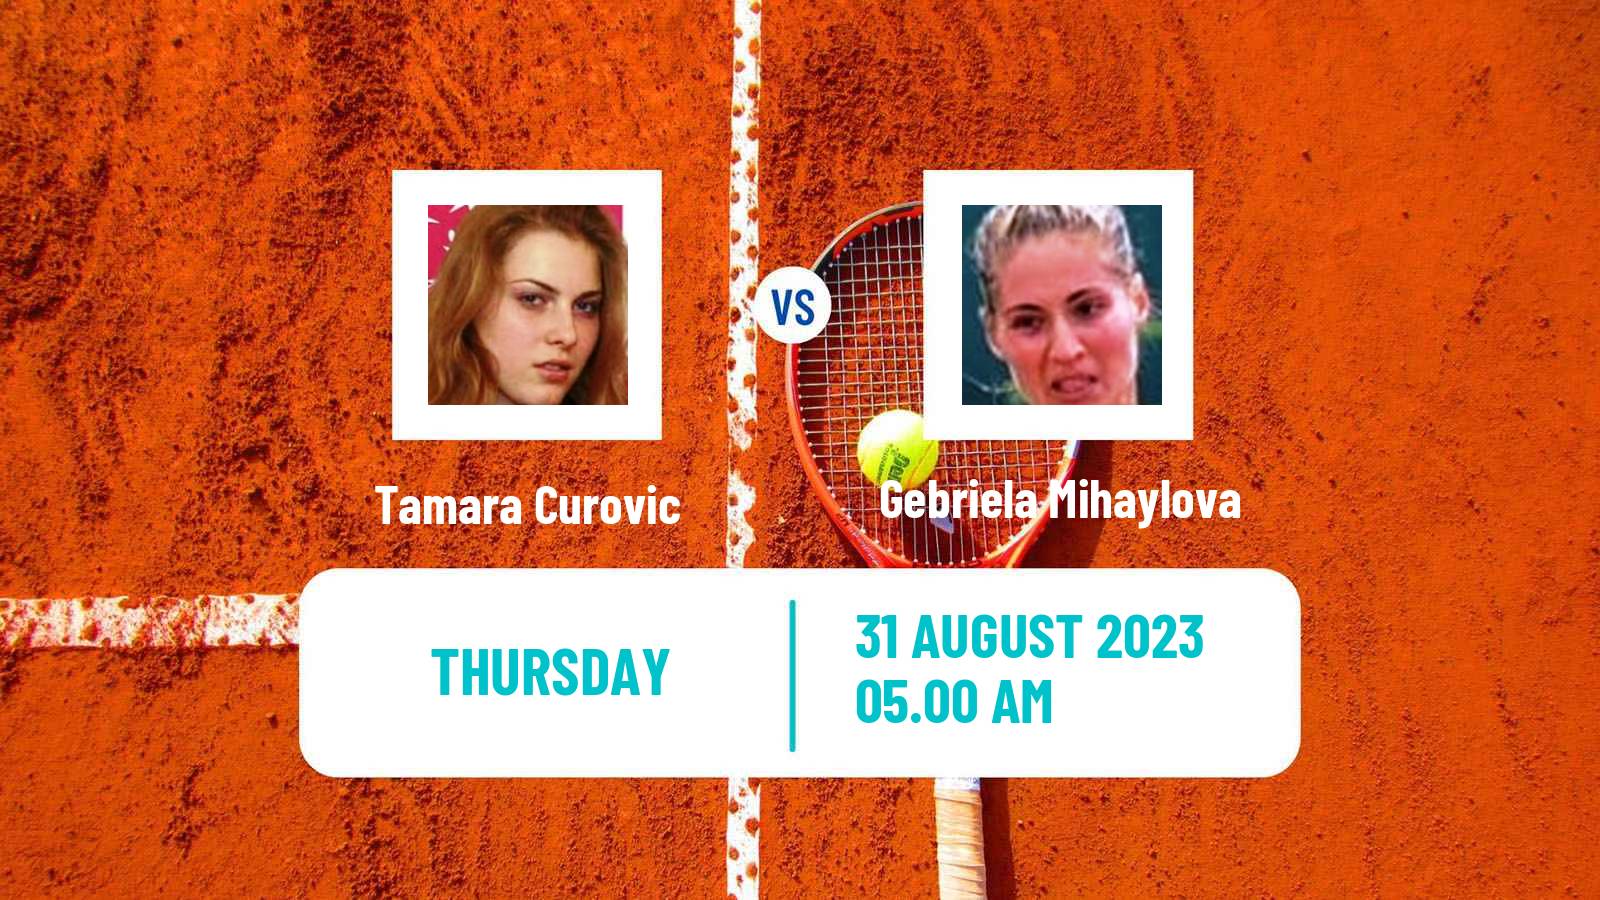 Tennis ITF W15 Kursumlijska Banja 8 Women Tamara Curovic - Gebriela Mihaylova